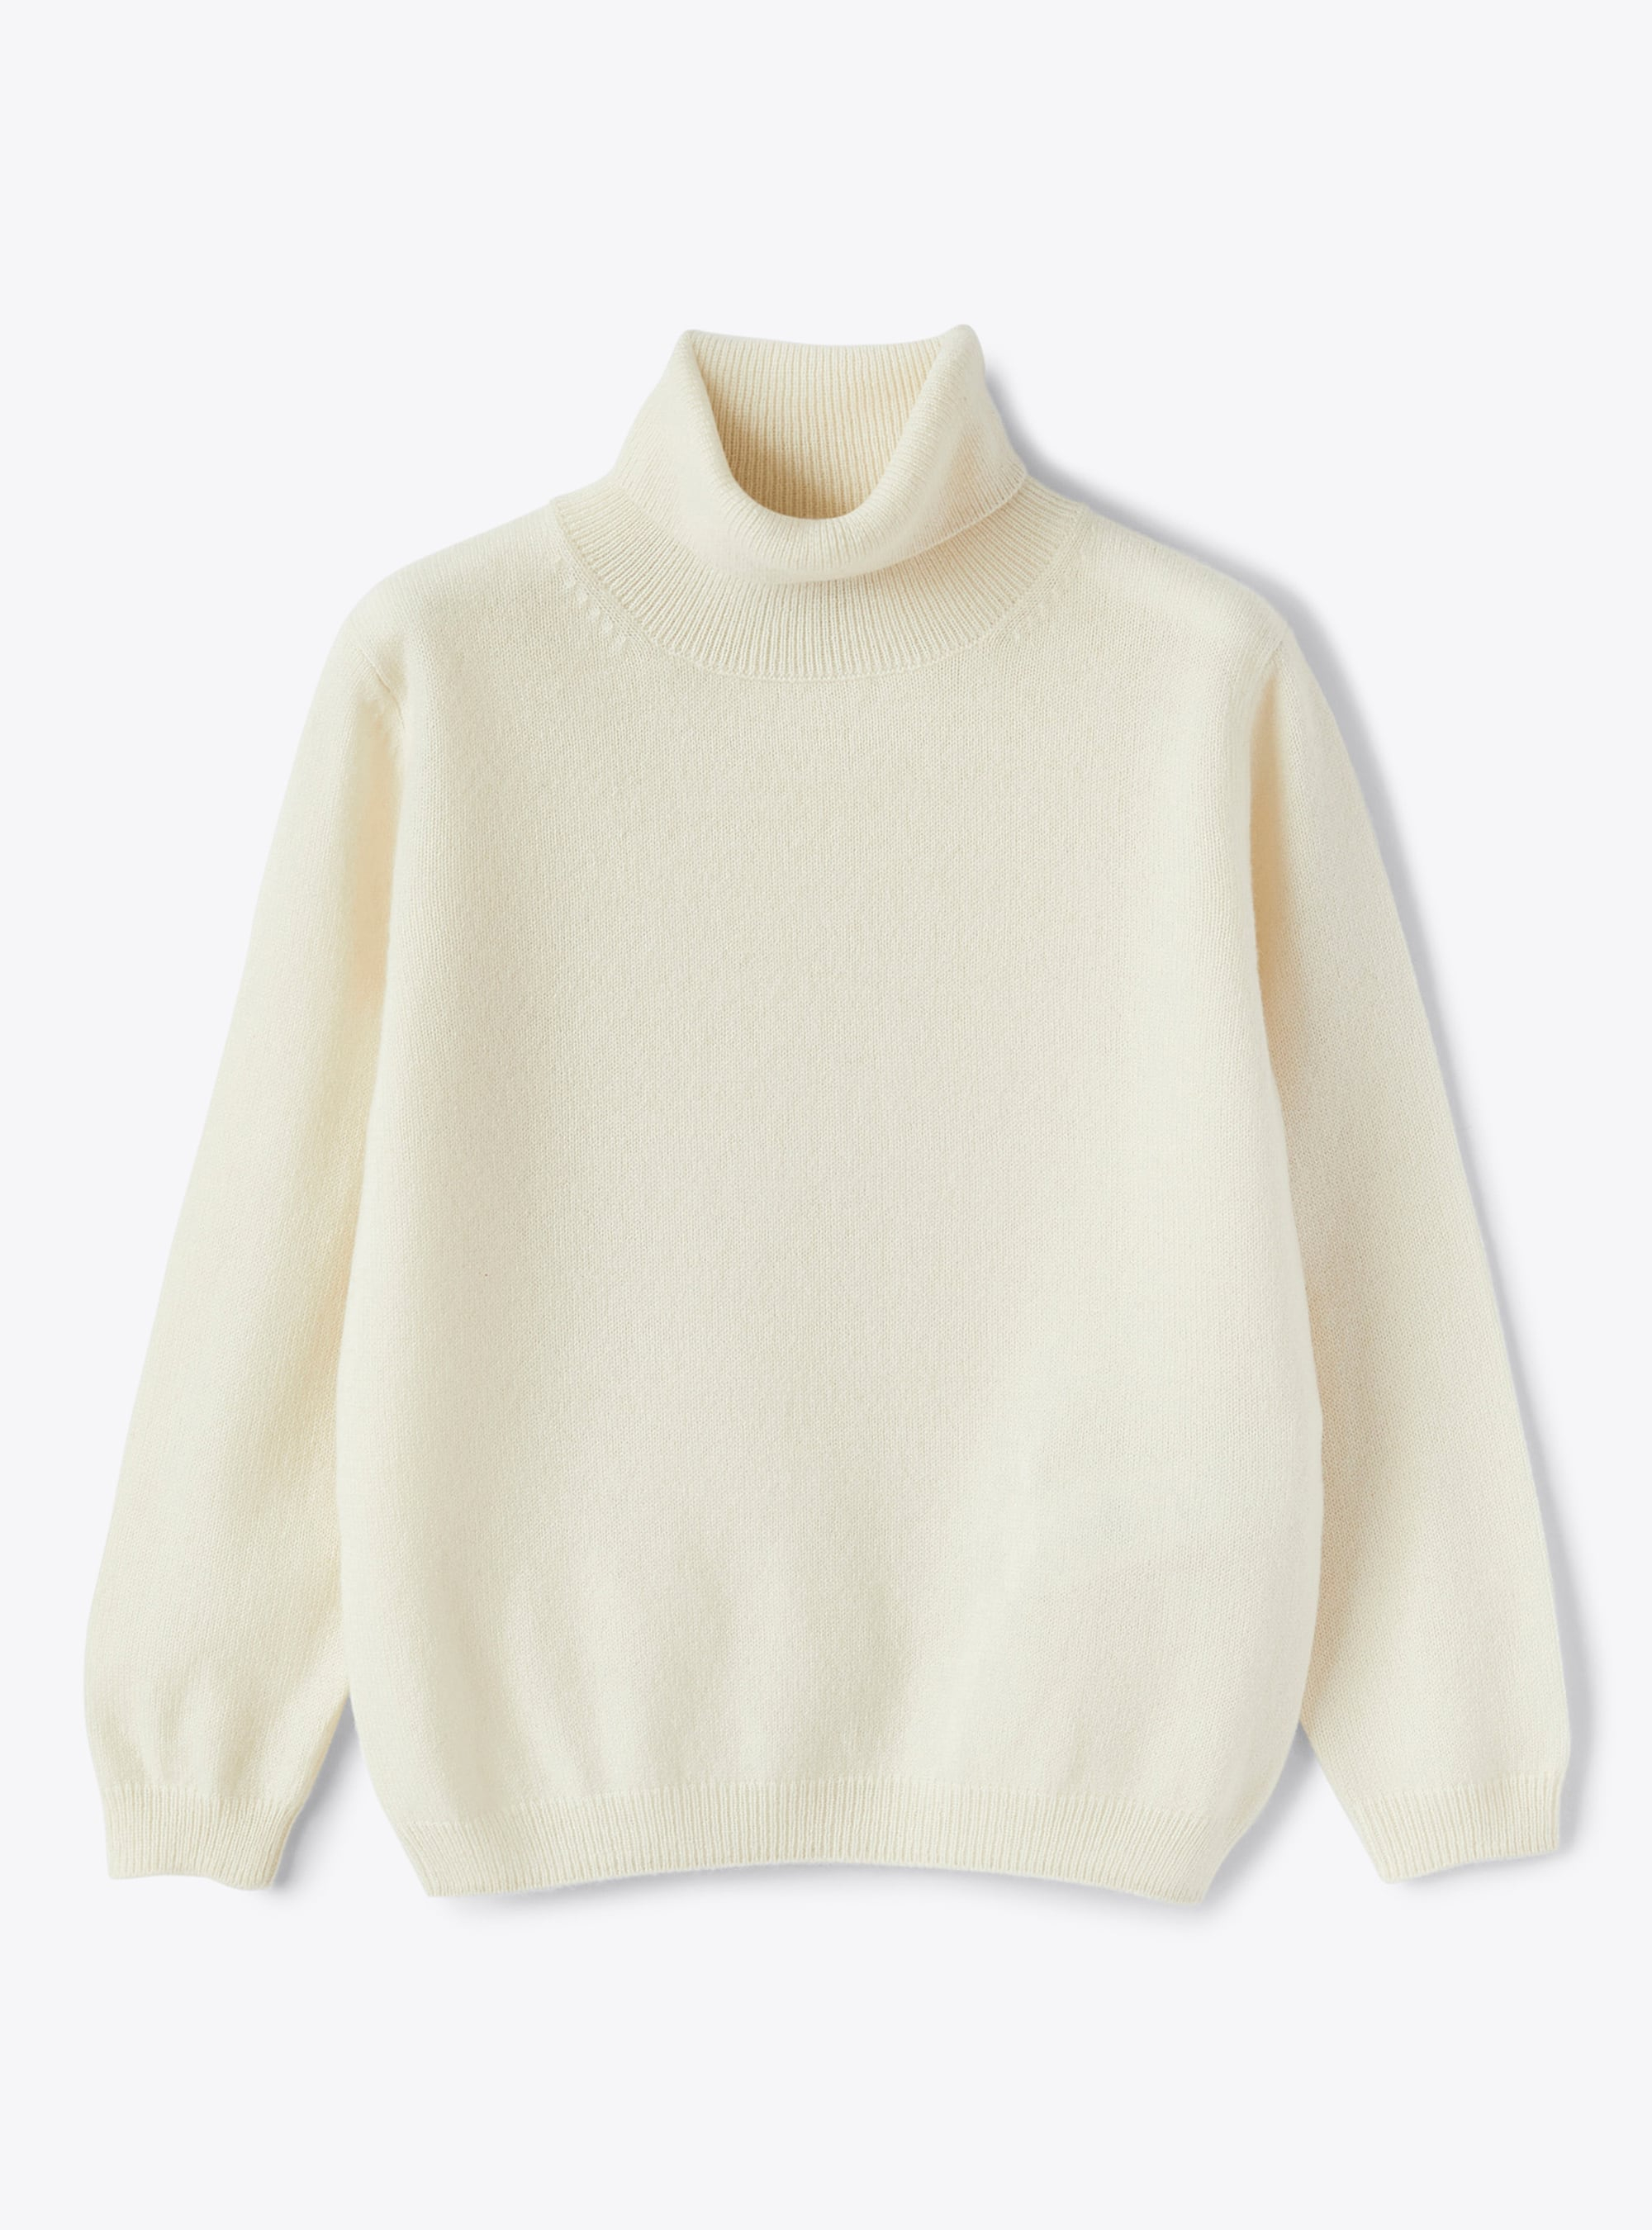 White merino wool turtleneck sweater - Sweaters - Il Gufo